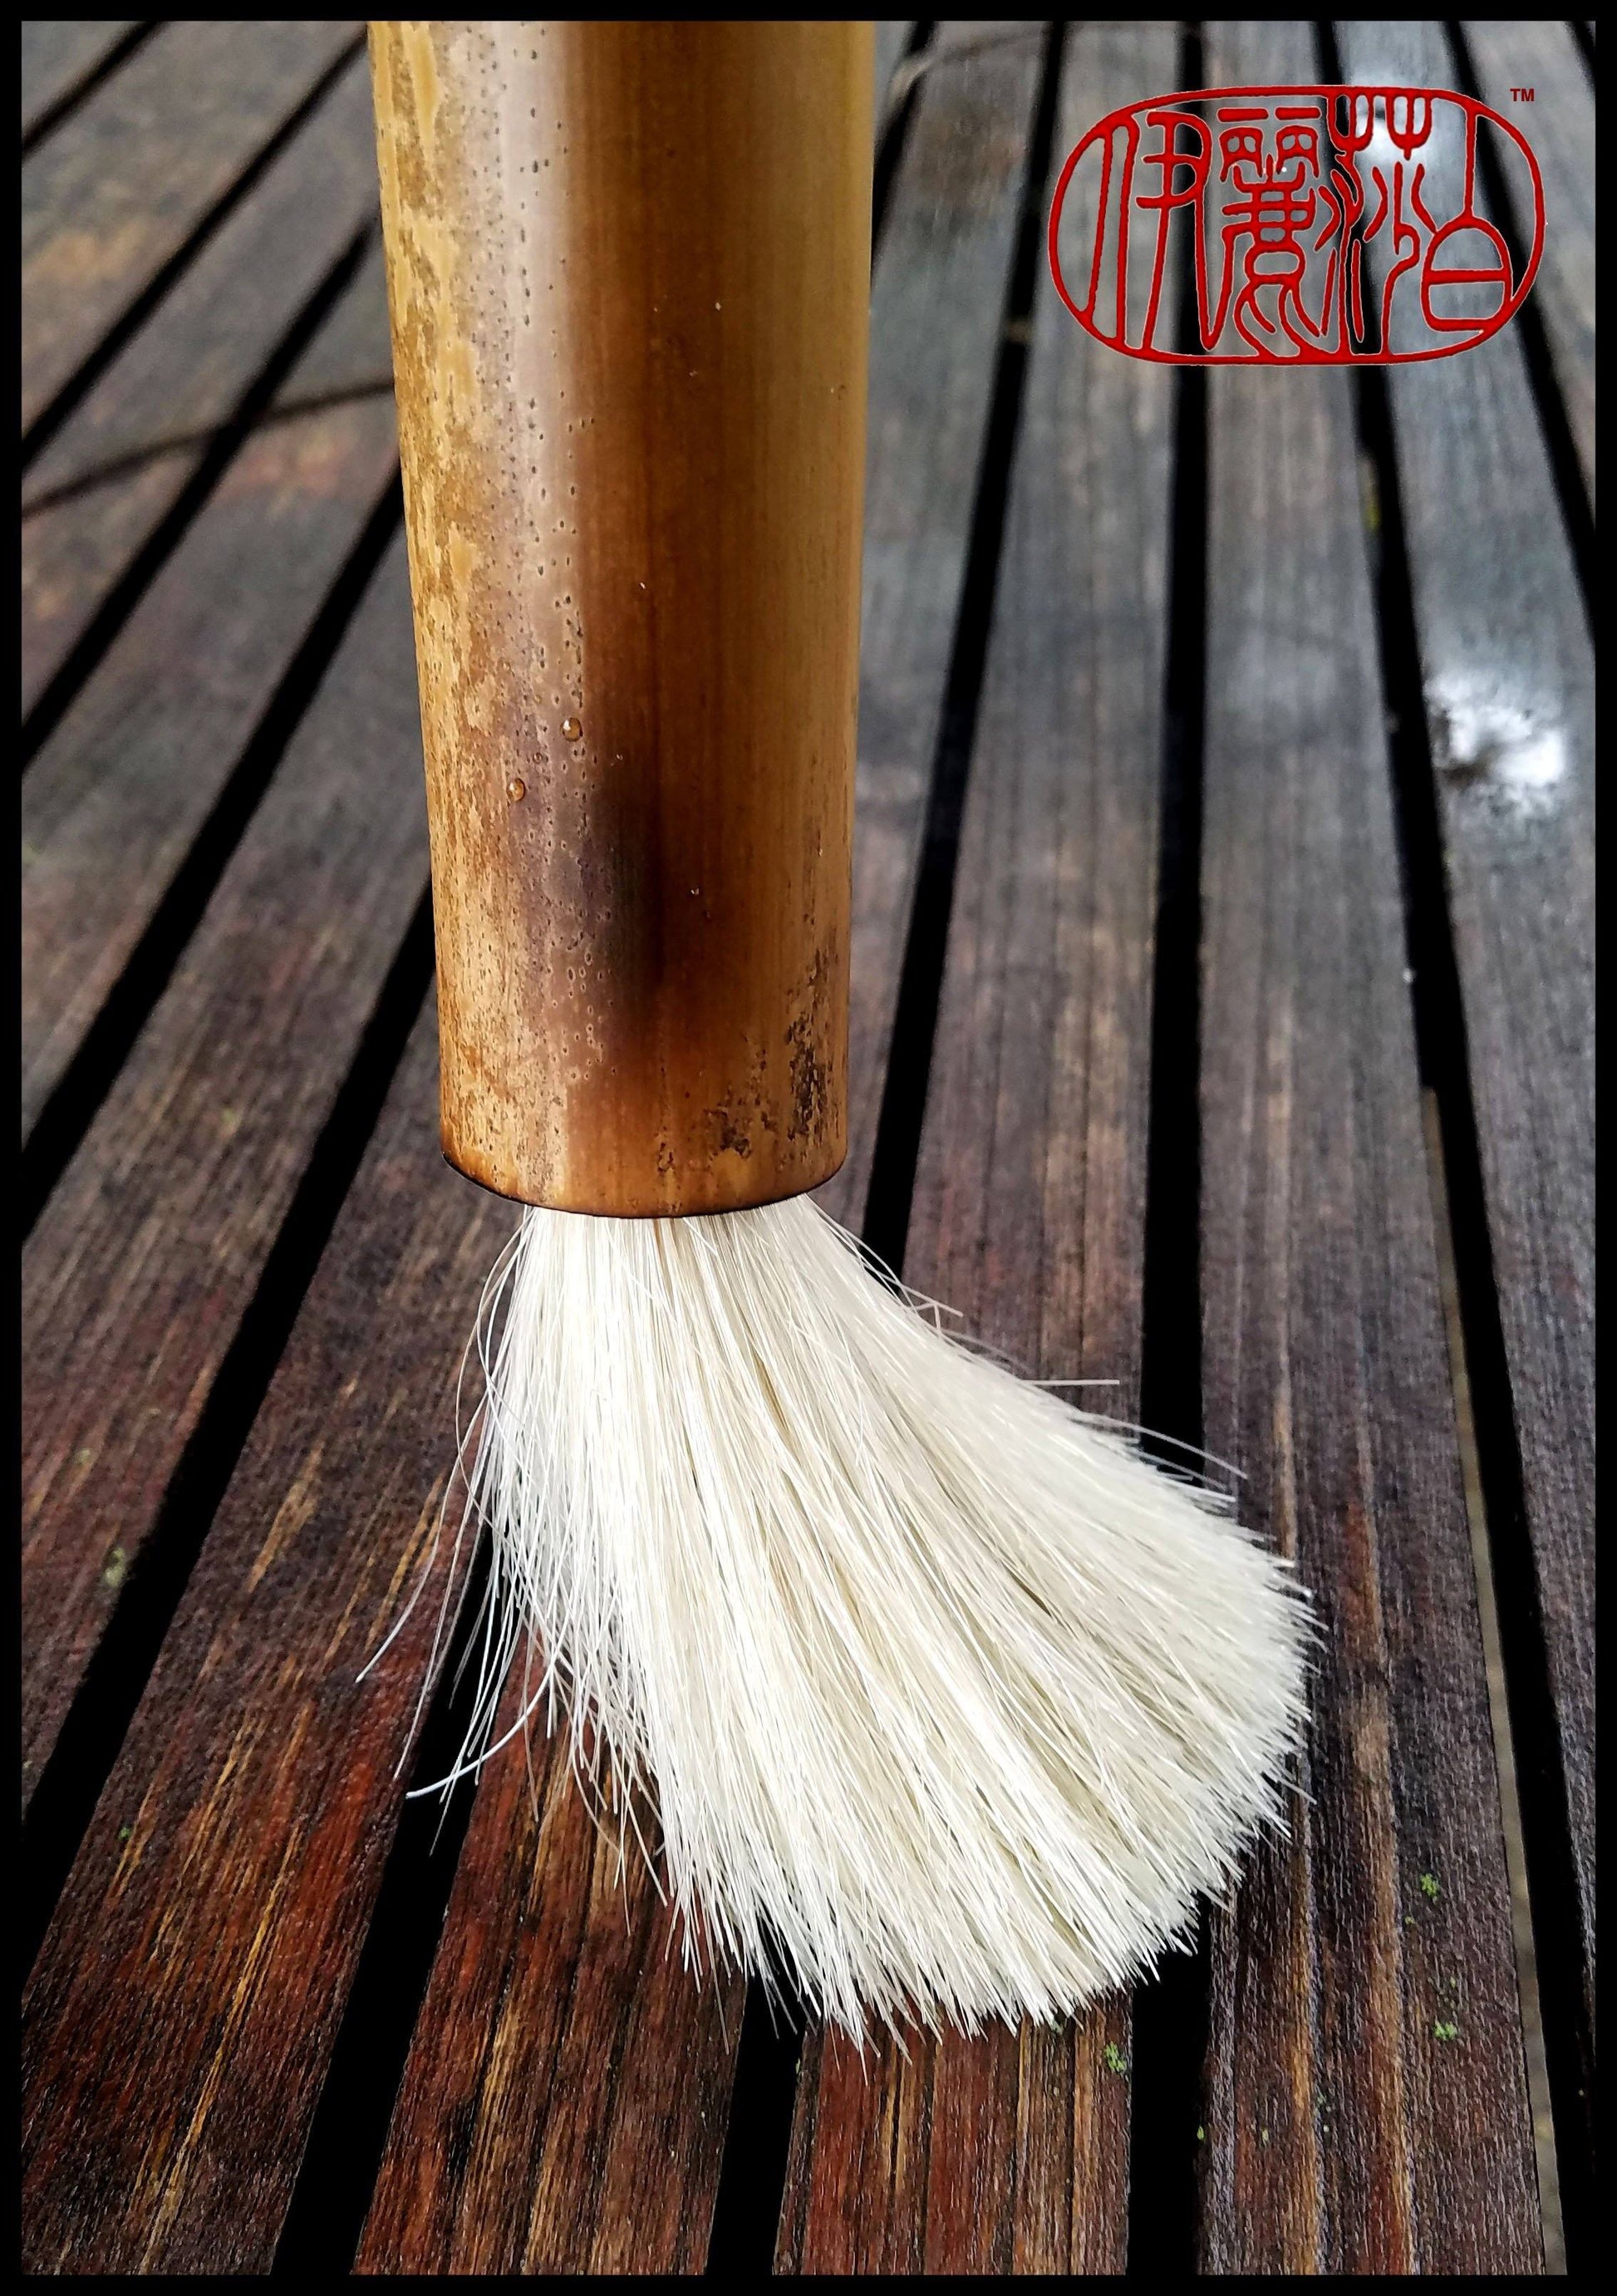 Grooming Brush | Coco Fiber Horse Brush